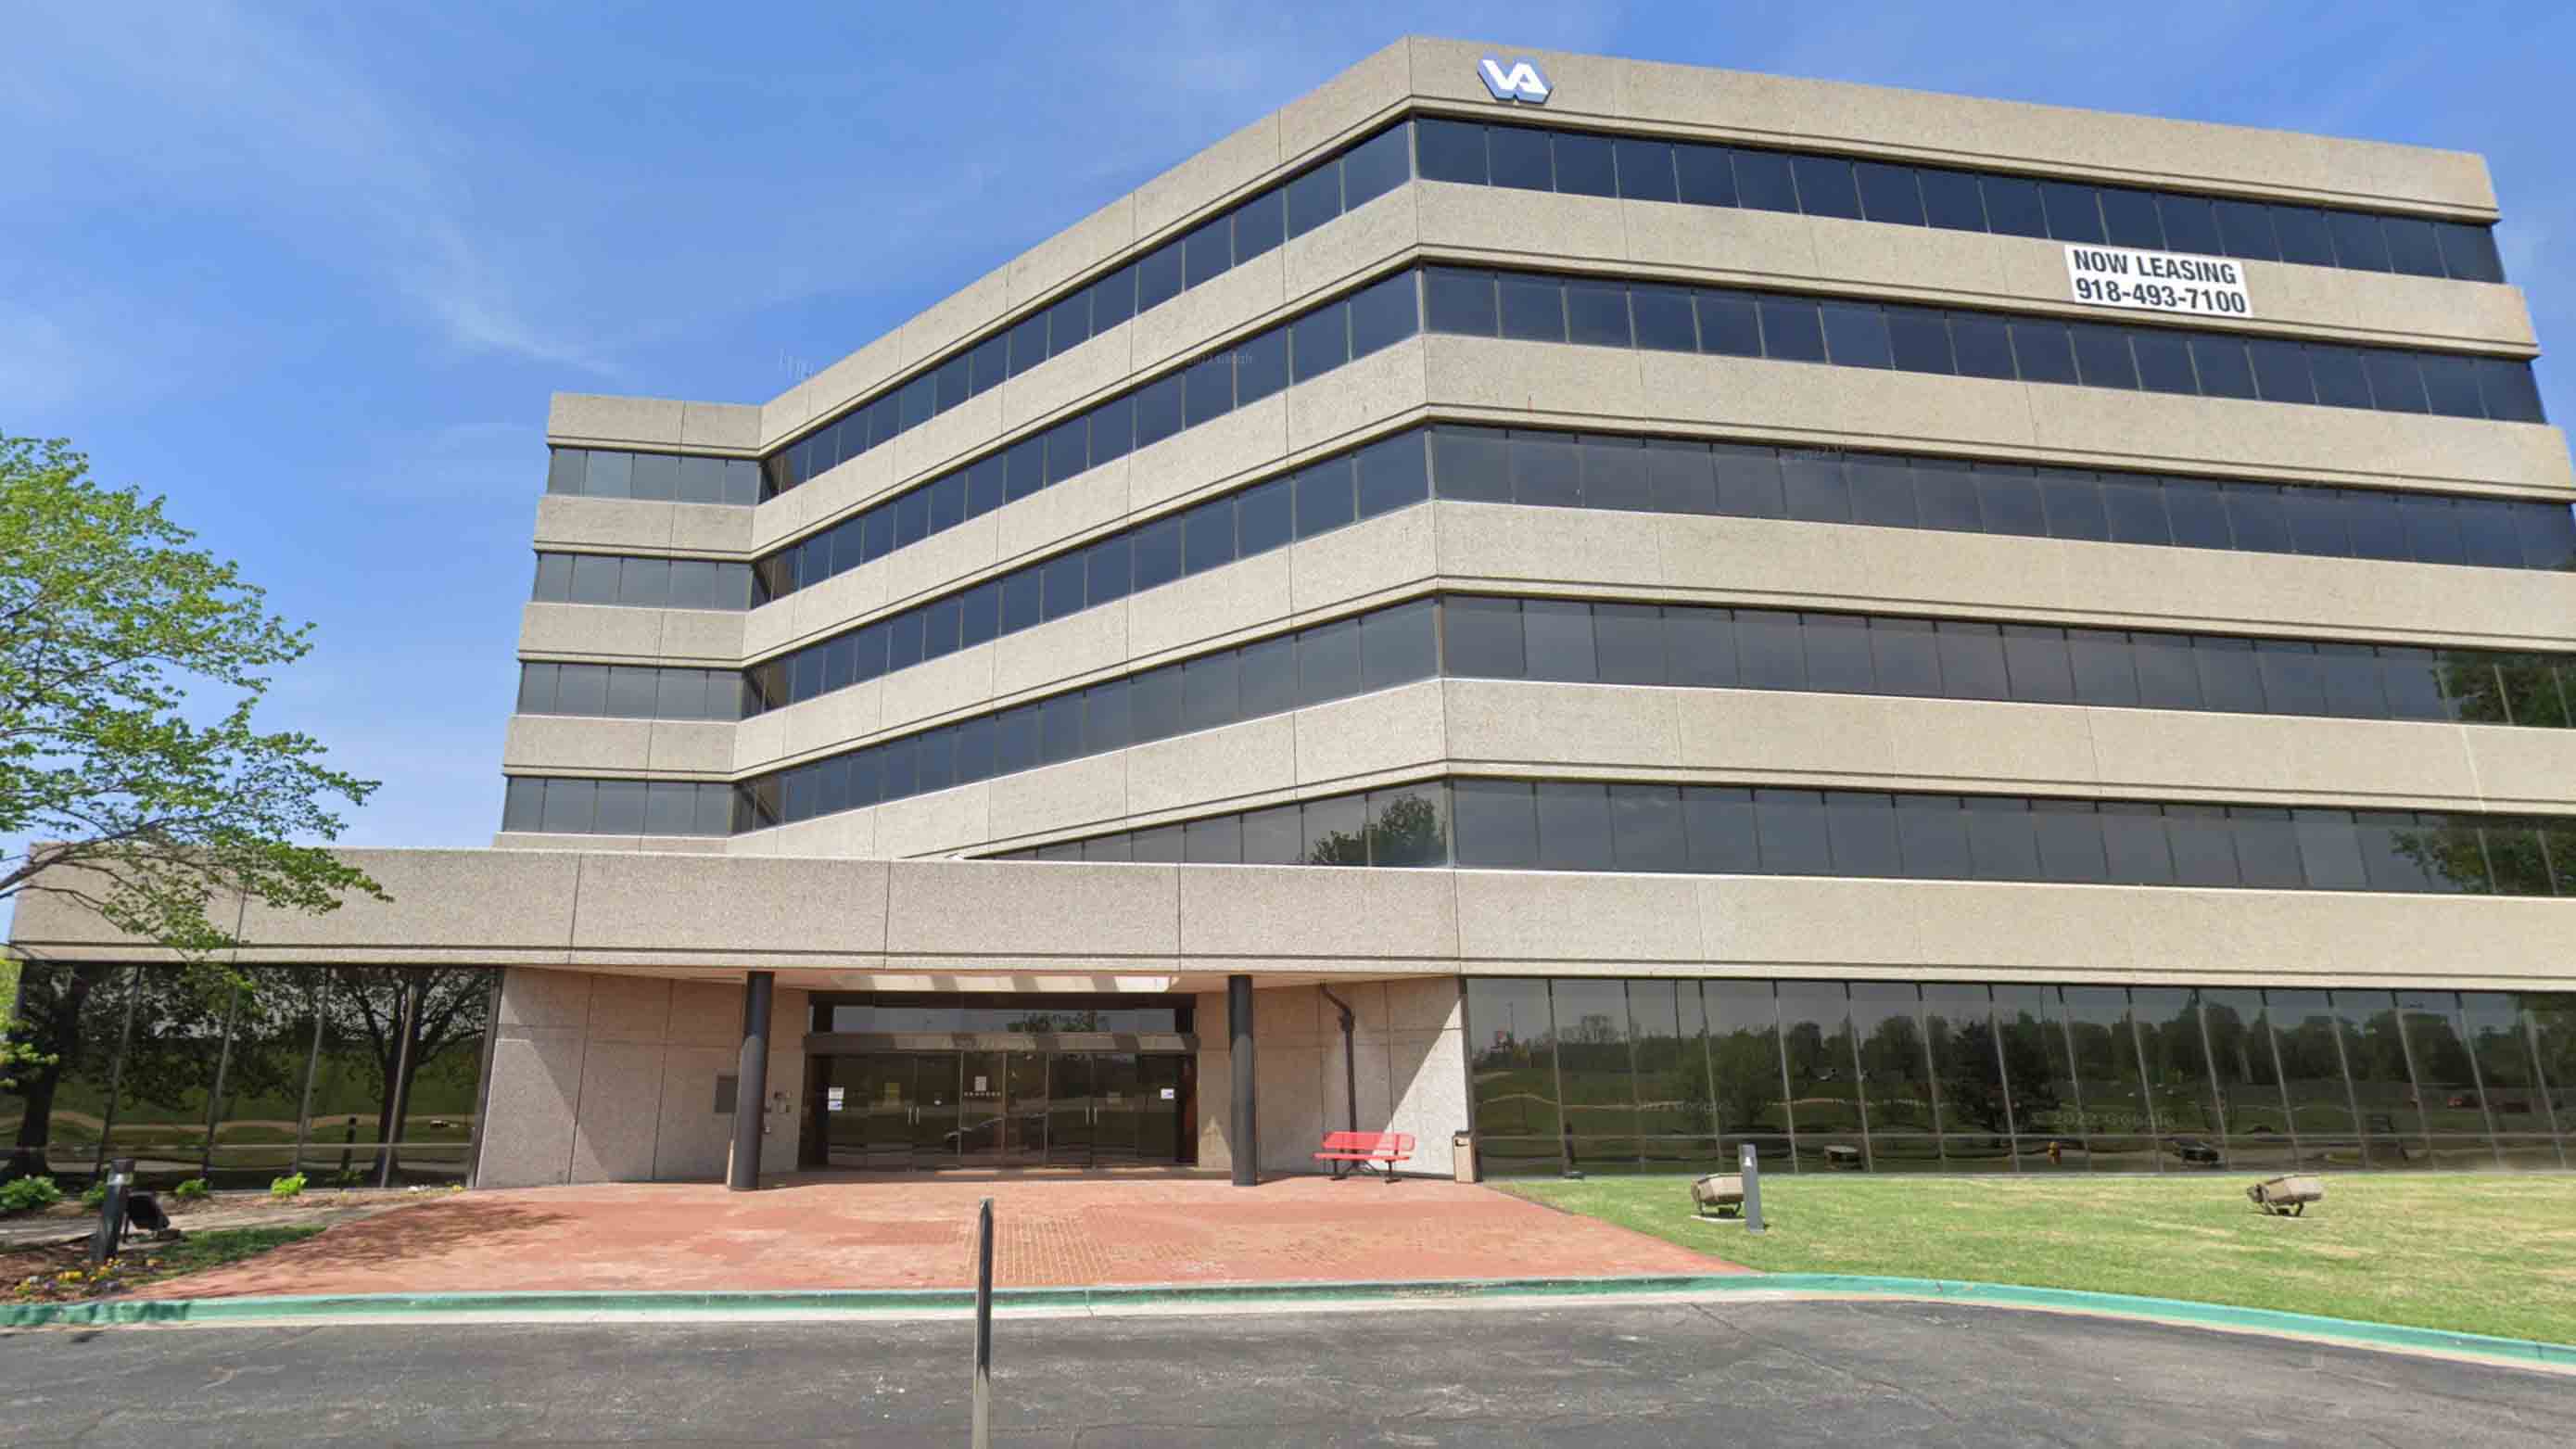 NorthStar Technologies, Inc in Tulsa